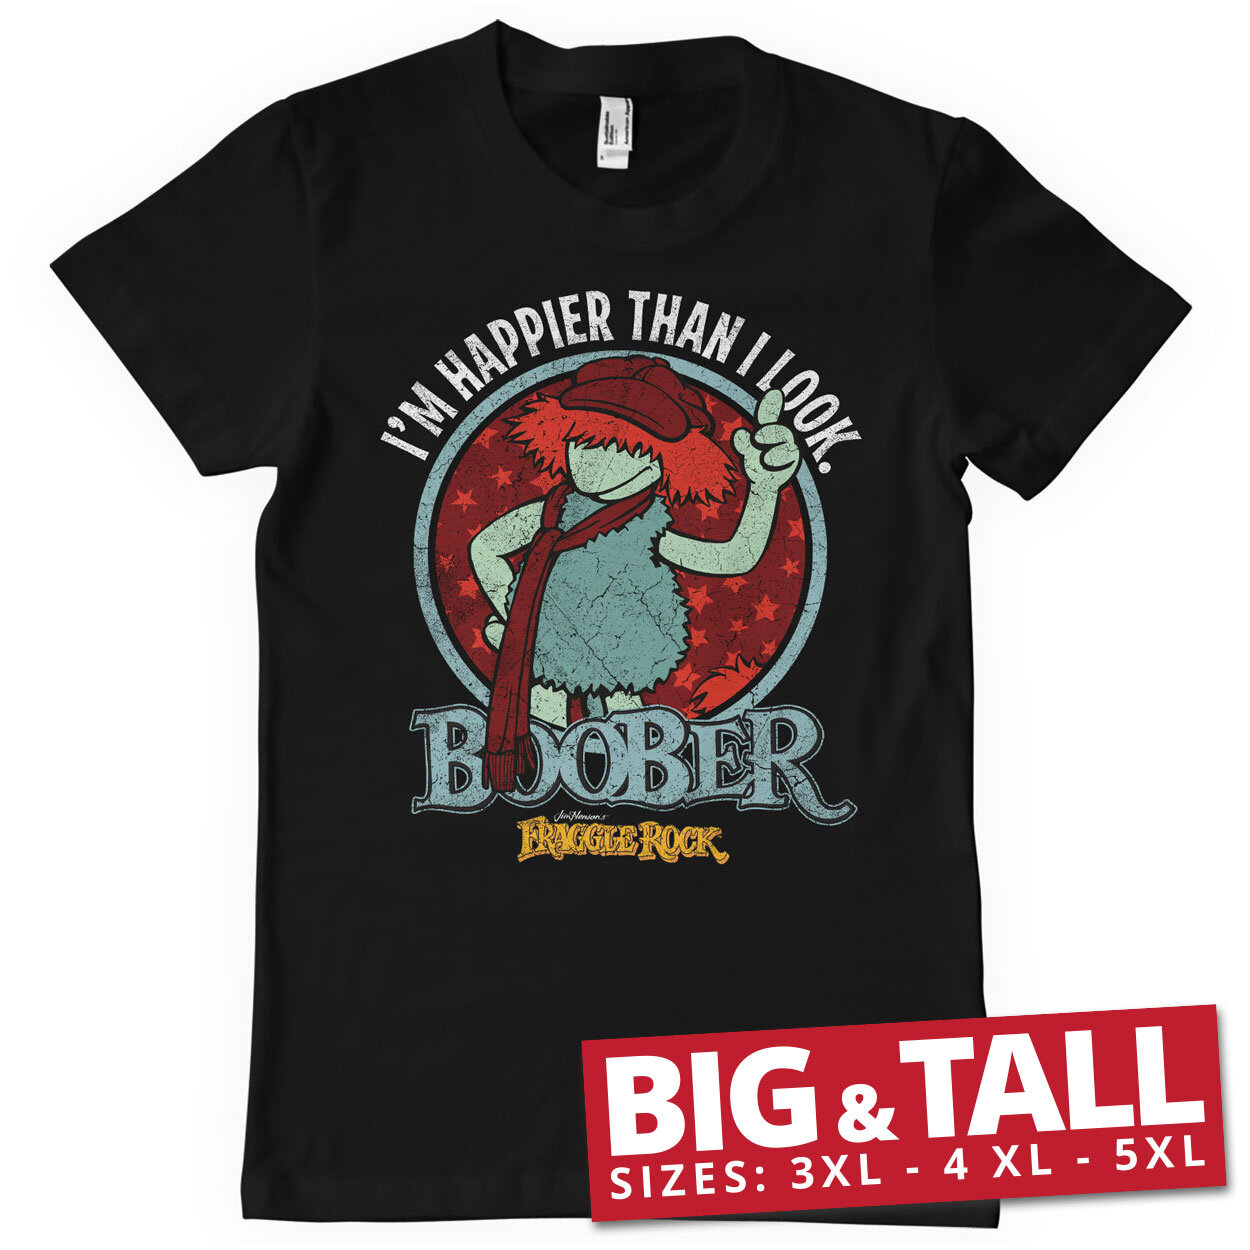 Boober - Happier Than I Look Big & Tall T-Shirt